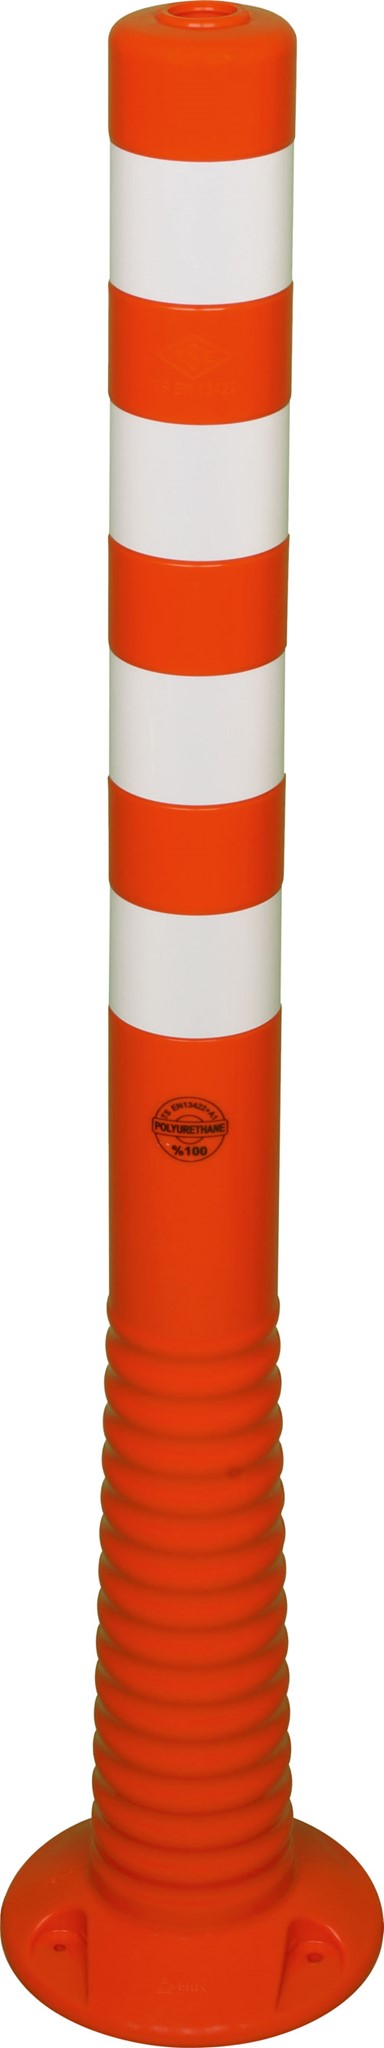 Image de Flexipfosten 1000mm, Ø 80mm, orange